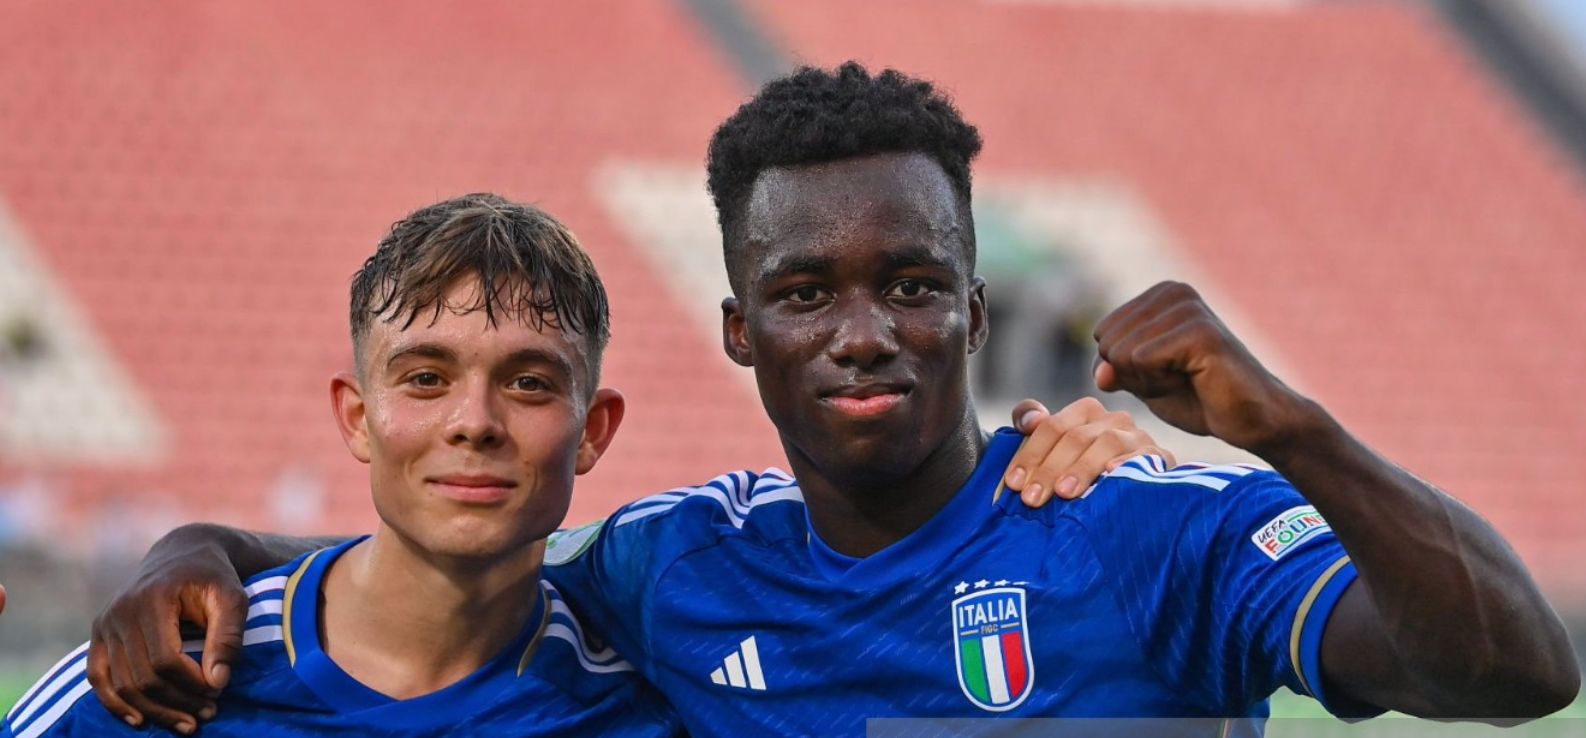 Italy U19, led by captain Filippo Missori, emerged victors in a hard-fought 1-0 win over Portugal U19 in the UEFA European U19 Championship final.